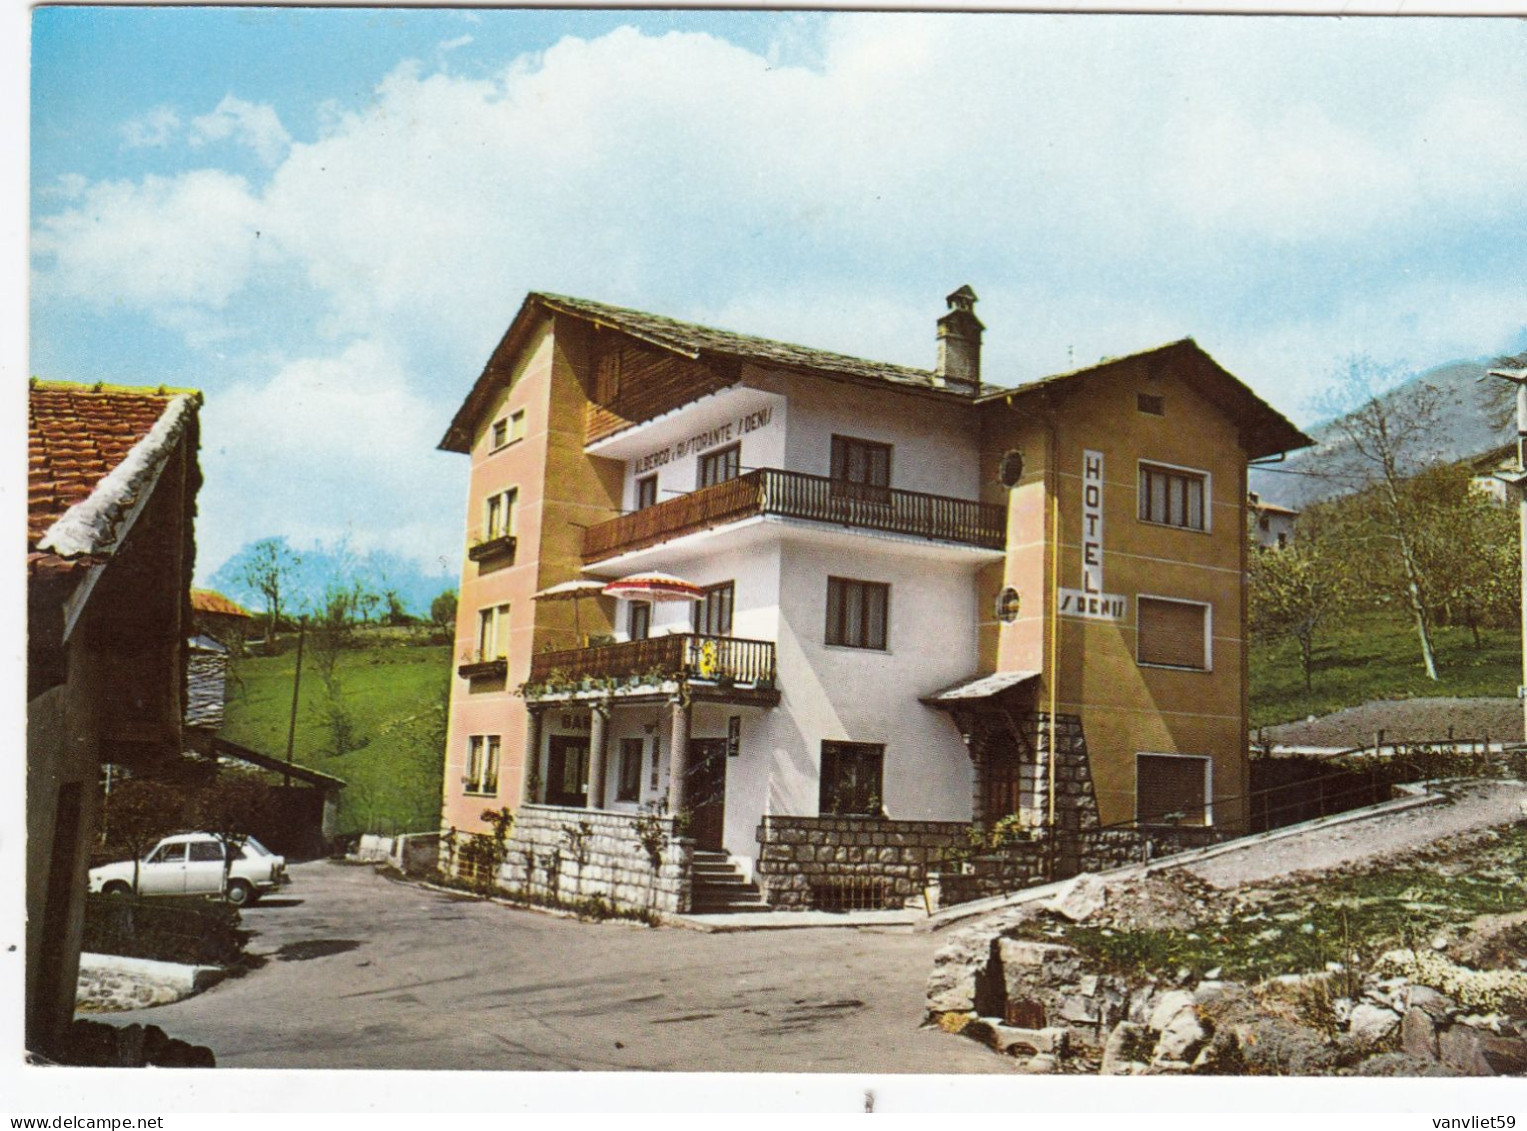 ST. DENIS-AOSTA-HOTEL=ST. DENIS=-CARTOLINA VERA FOTOGRAFIA VIAGGIATA IL 3-5-1953 - Cuneo